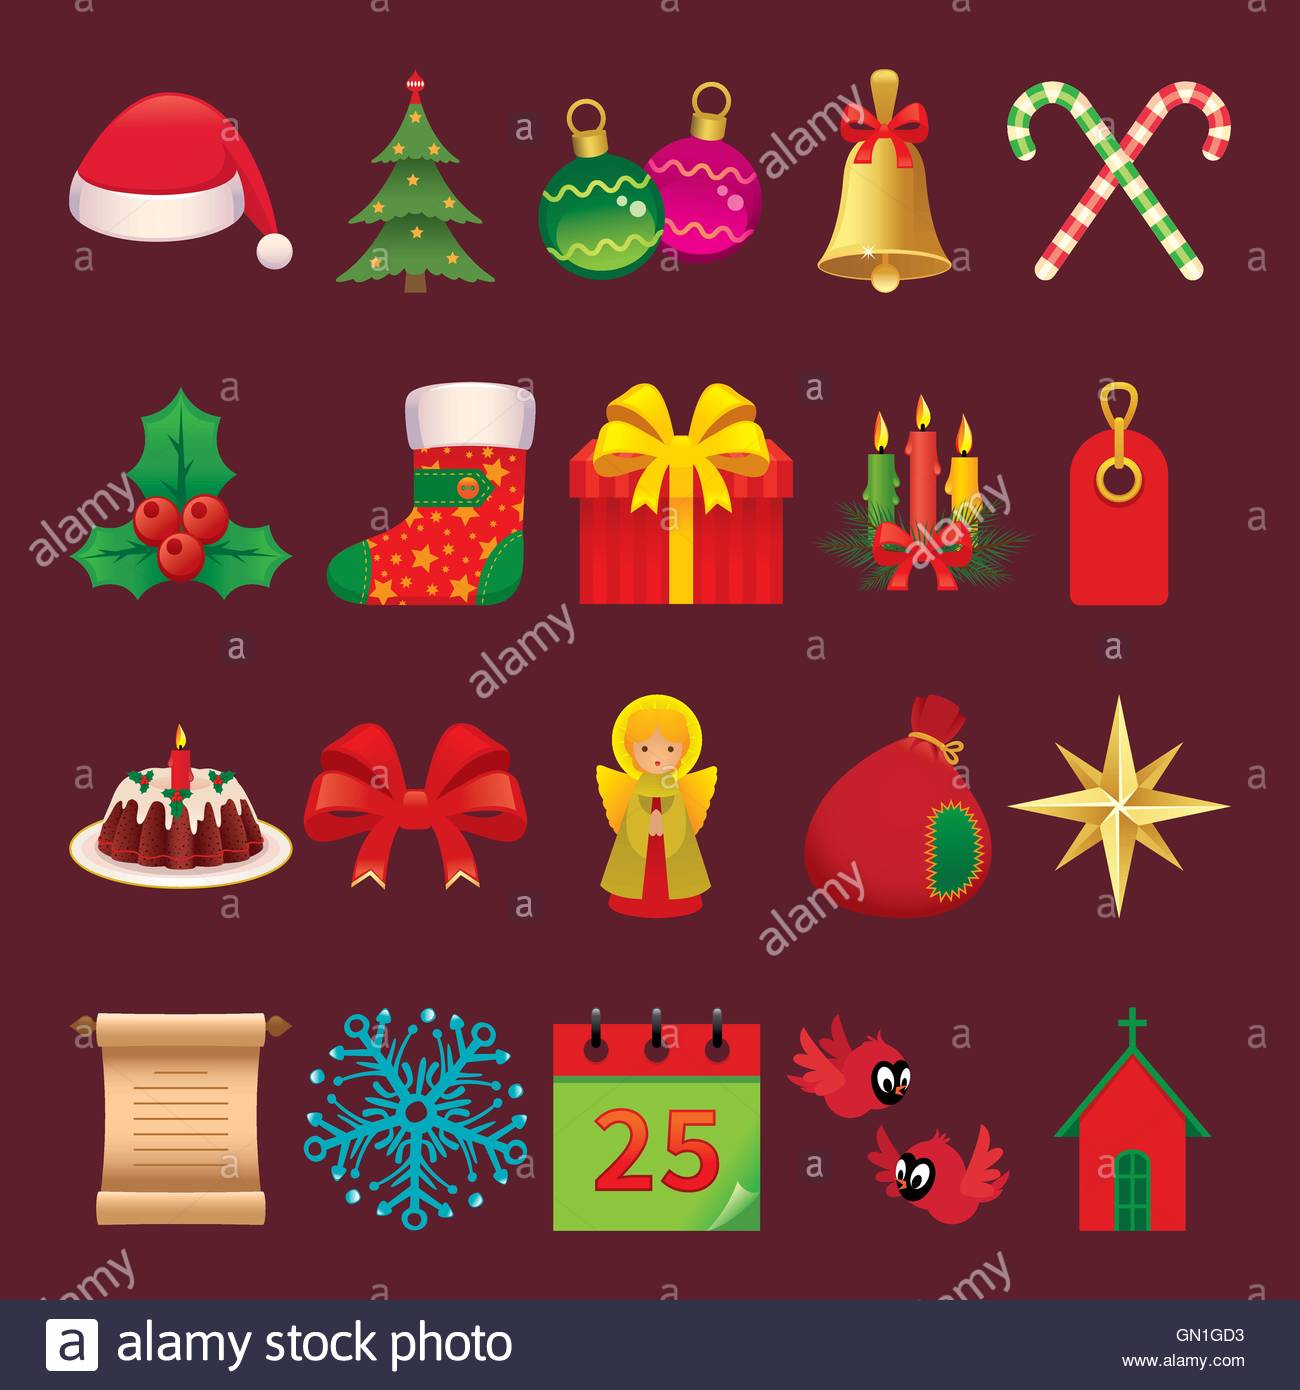 Christmas Symbols Set High Resolution Stock Photography and Images - Alamy